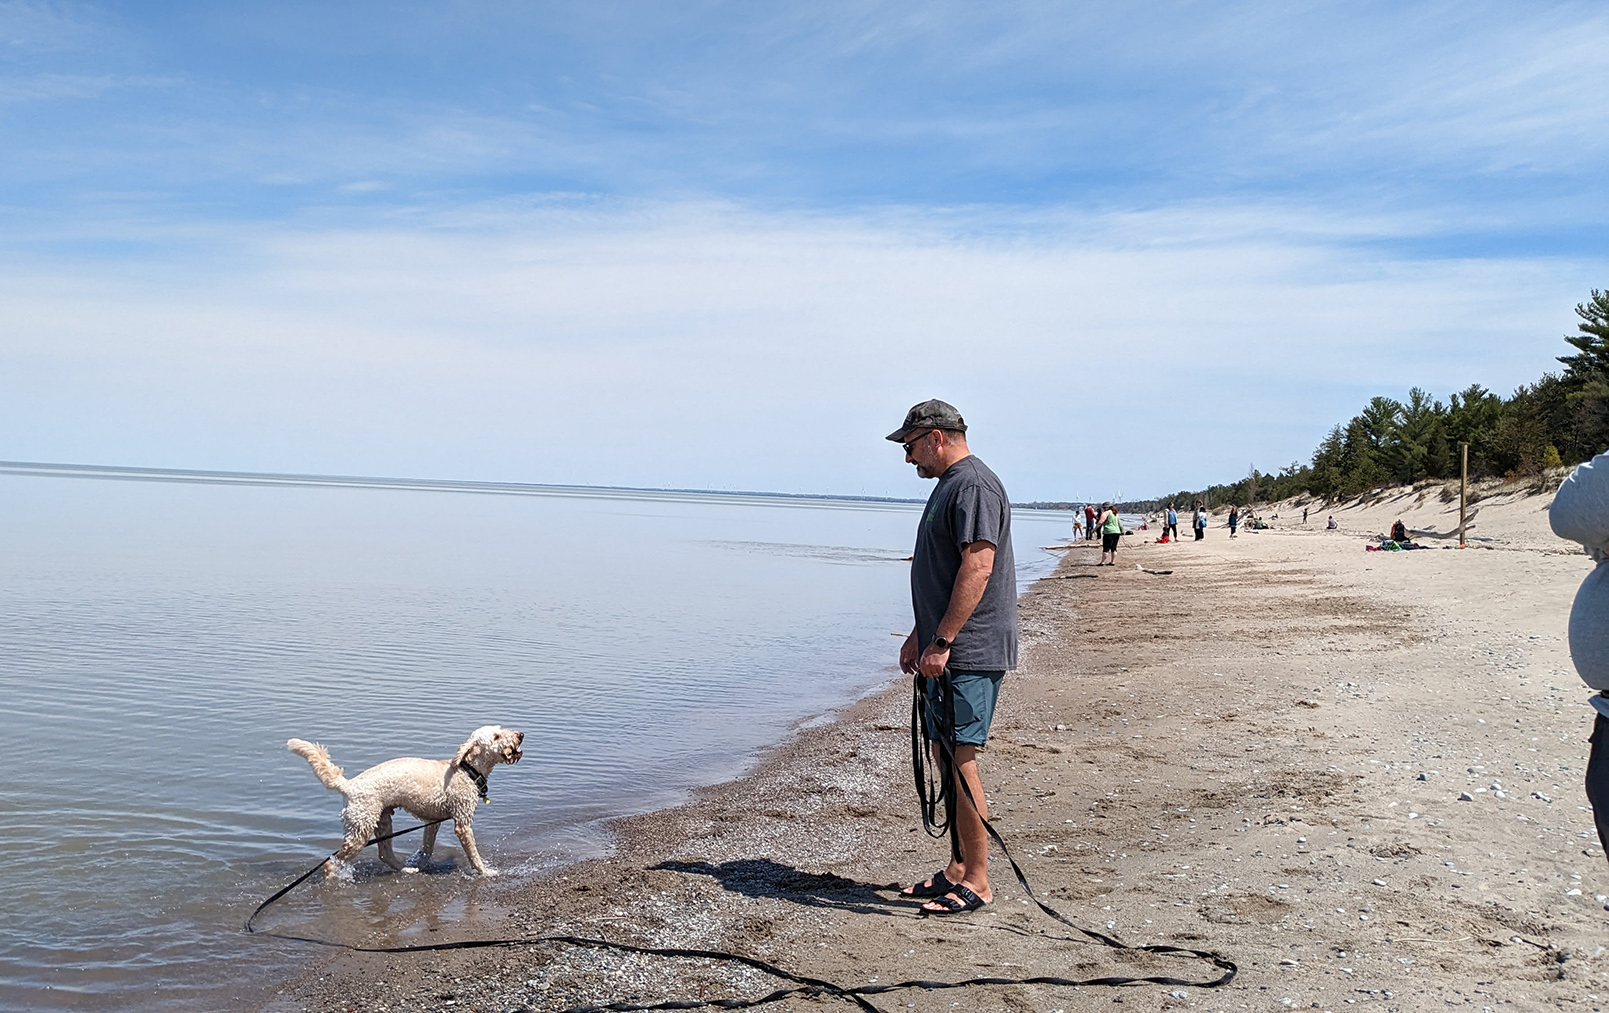 Ben & Jax at the dog beach